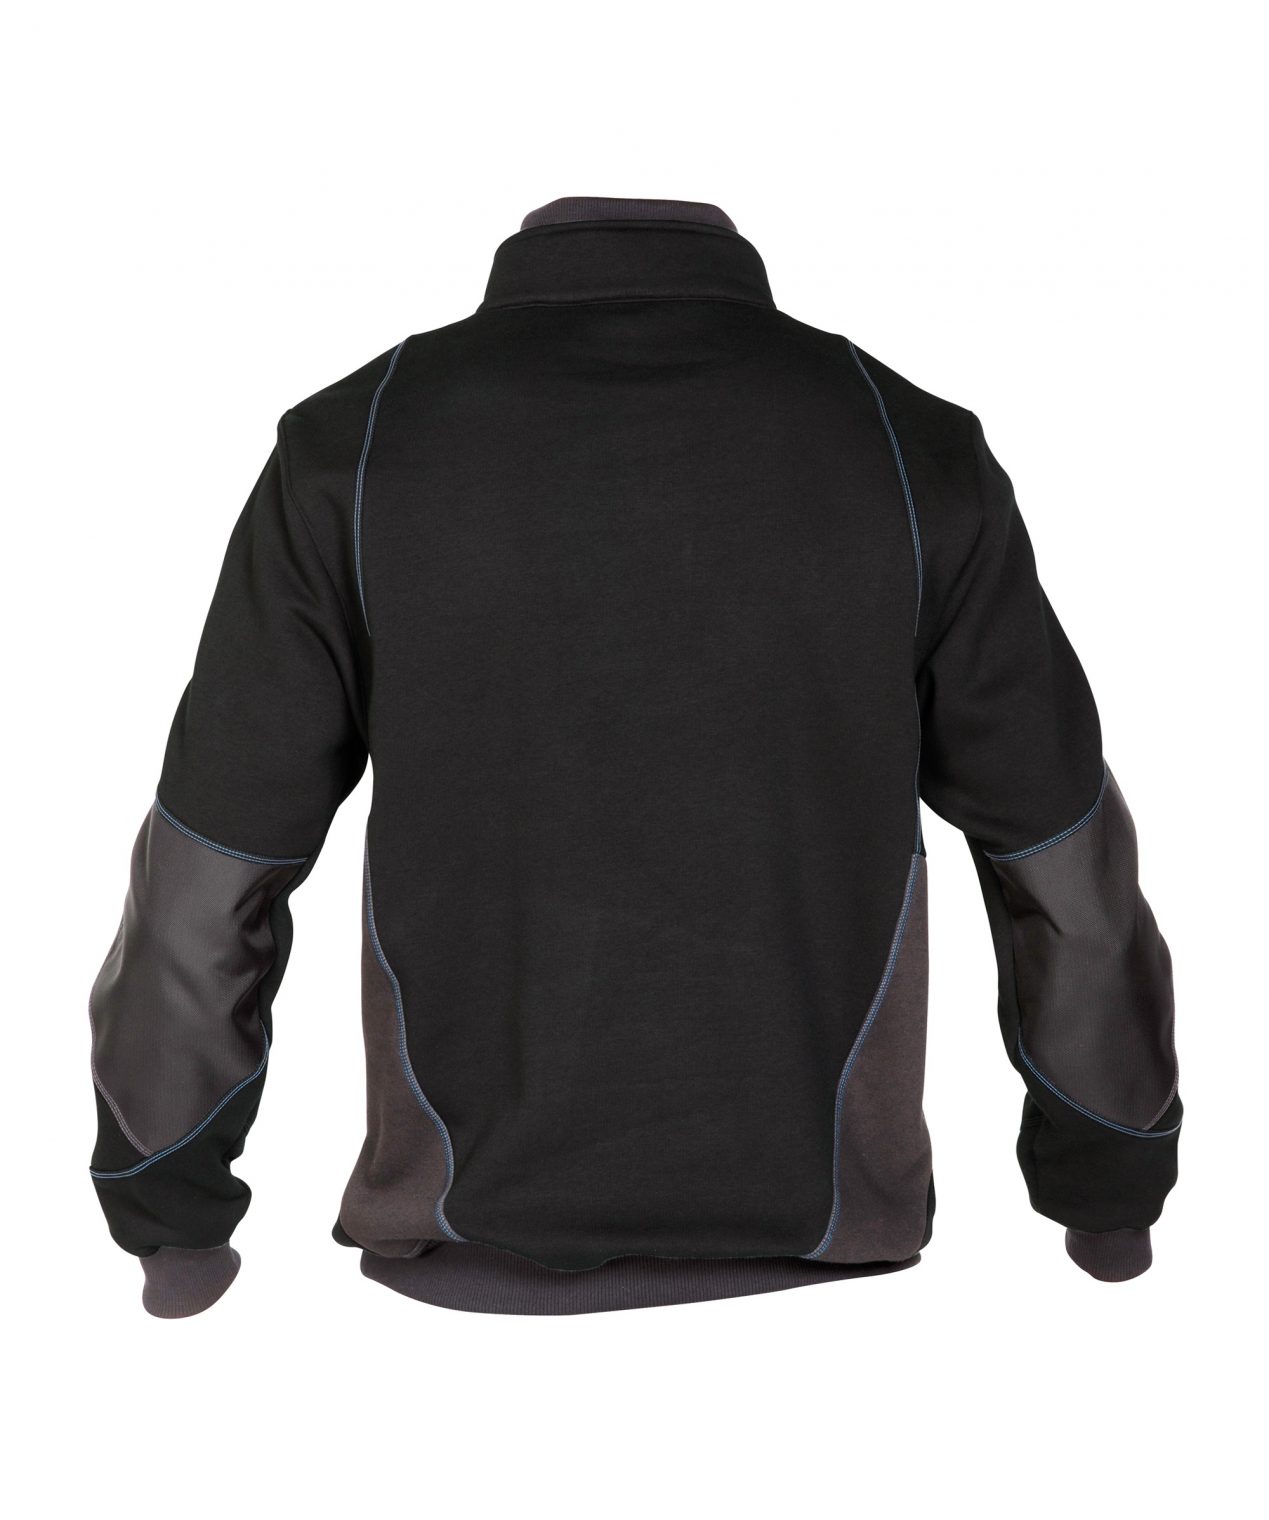 stellar sweatshirt black anthracite grey back